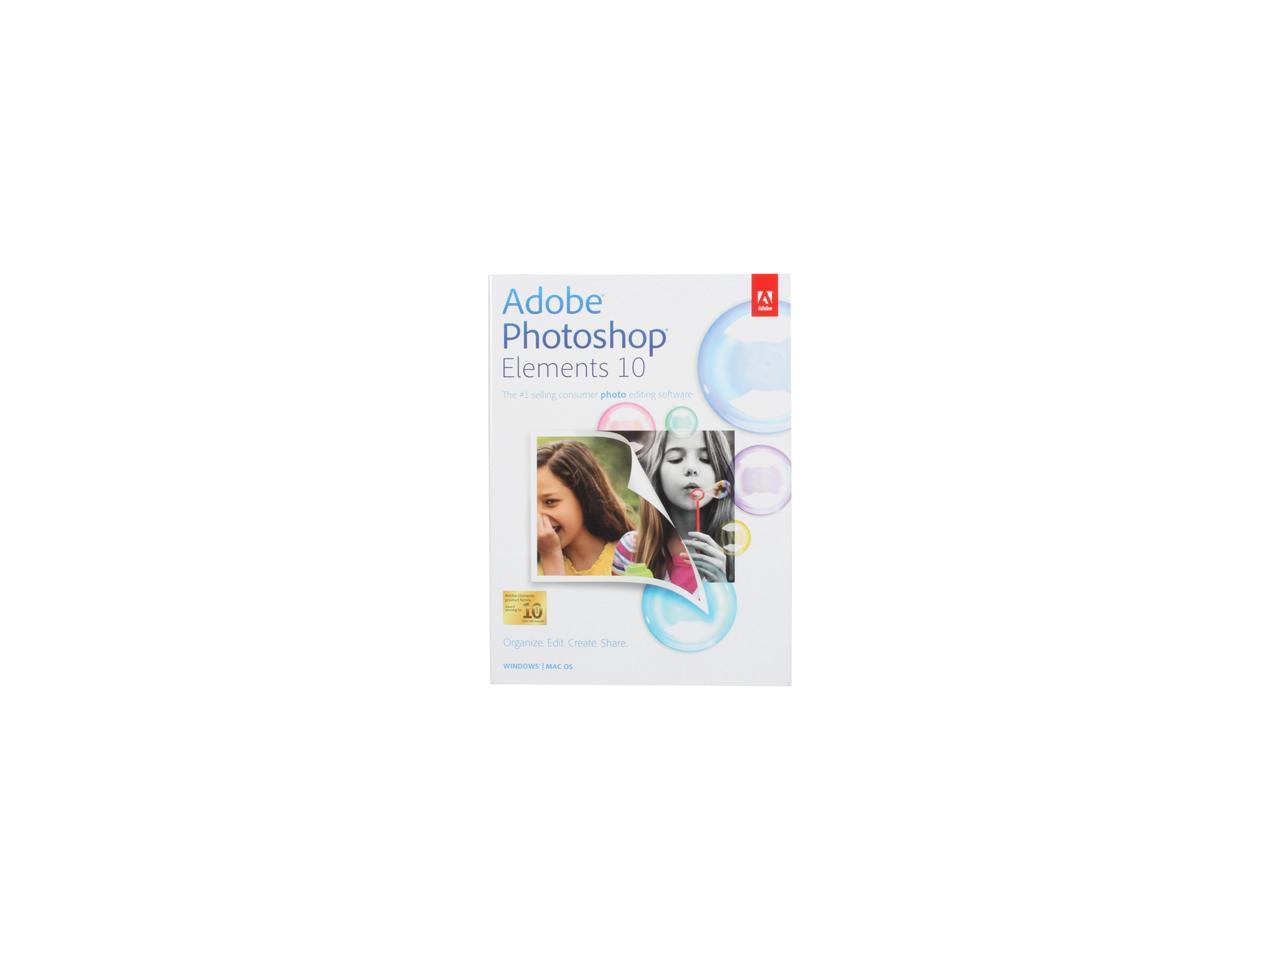 Adobe Photoshop Elements 10 For Windows Mac Full Version Newegg Com